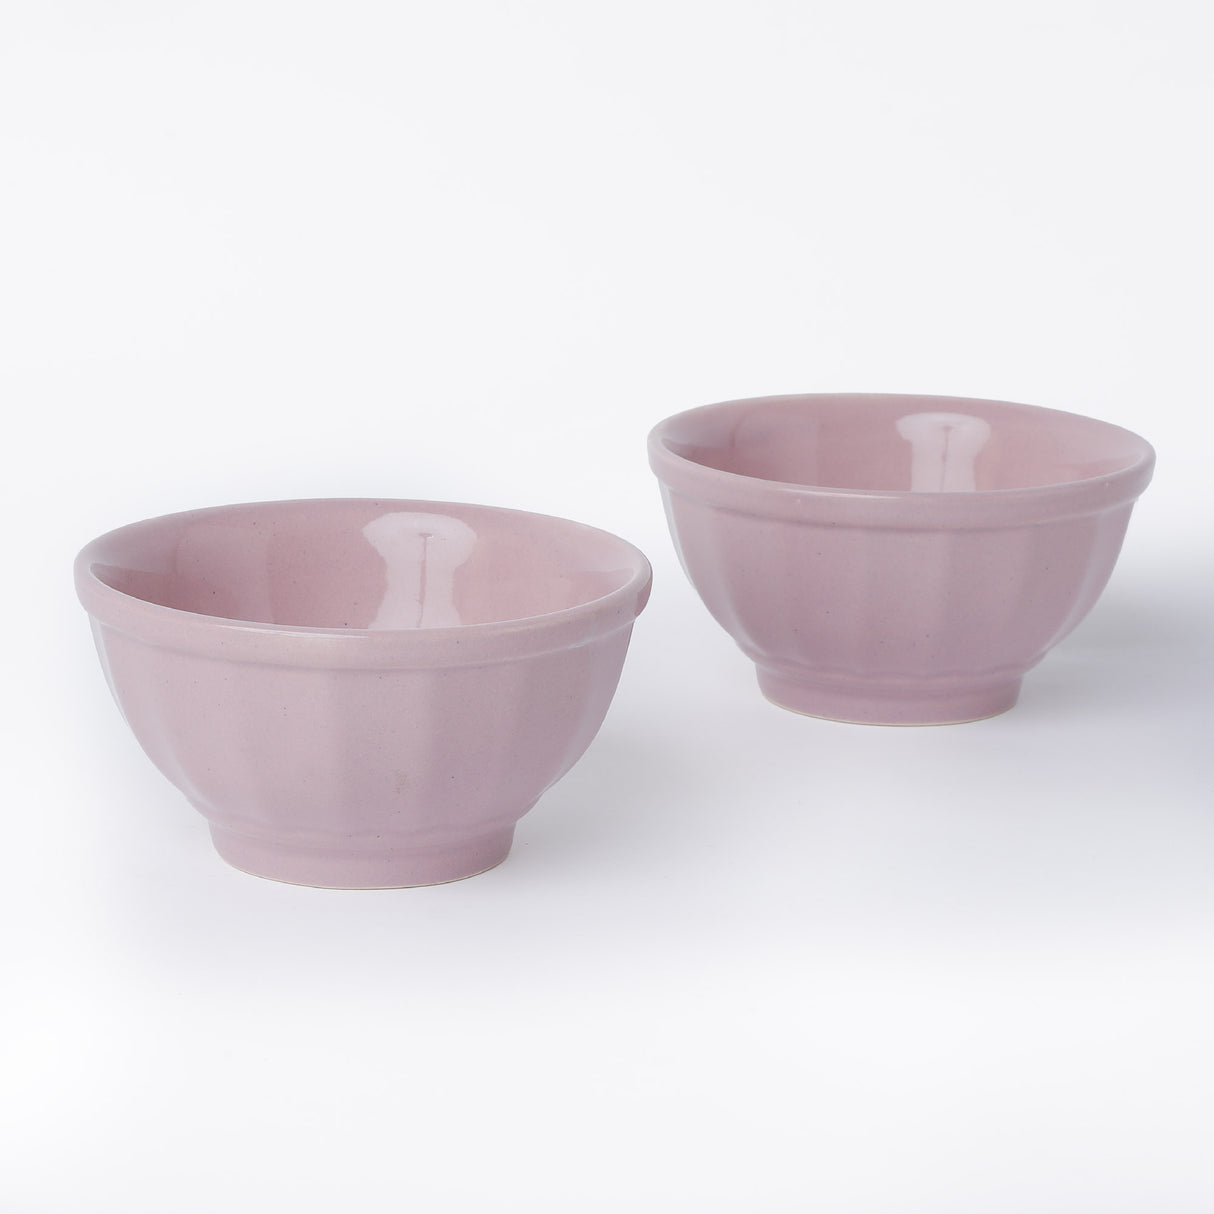 Scallop Ceramic Nut Bowl  | Set of 2